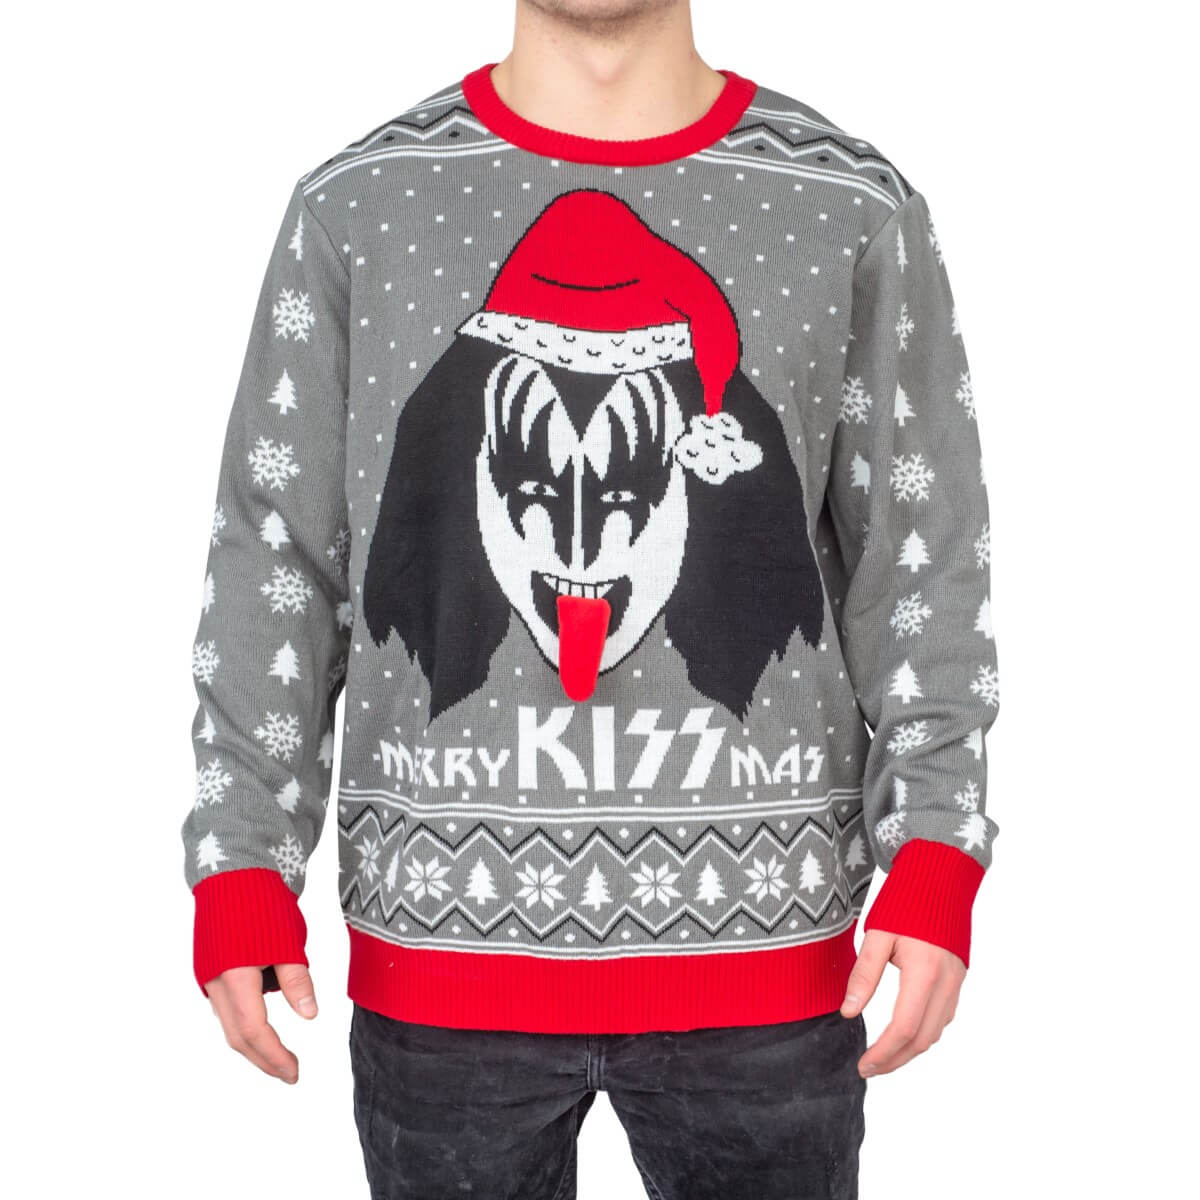 Aerosmith Rock and Roll Music Band Ugly Holiday Christmas Sweater 838440093 - 2XL